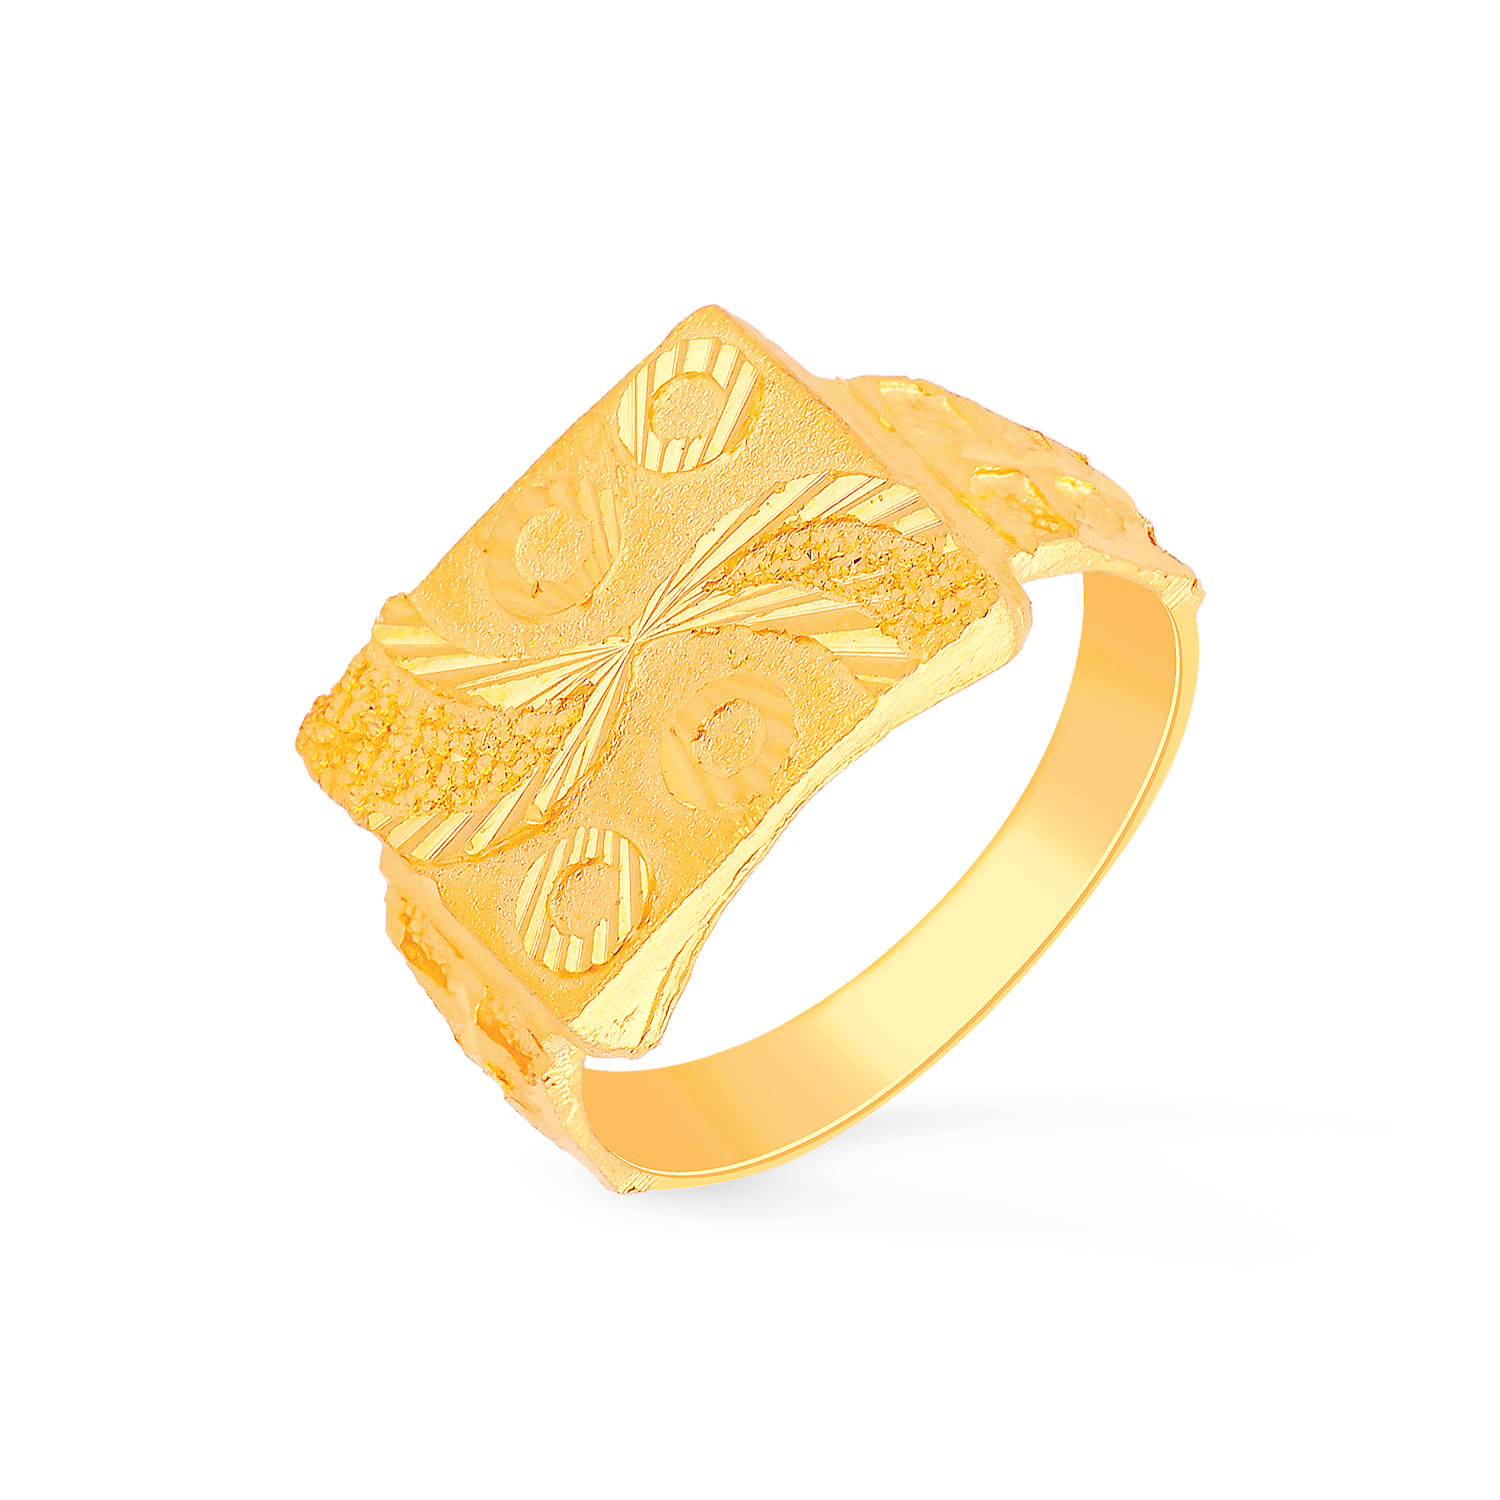 Malabar Gold Ring RG1105809